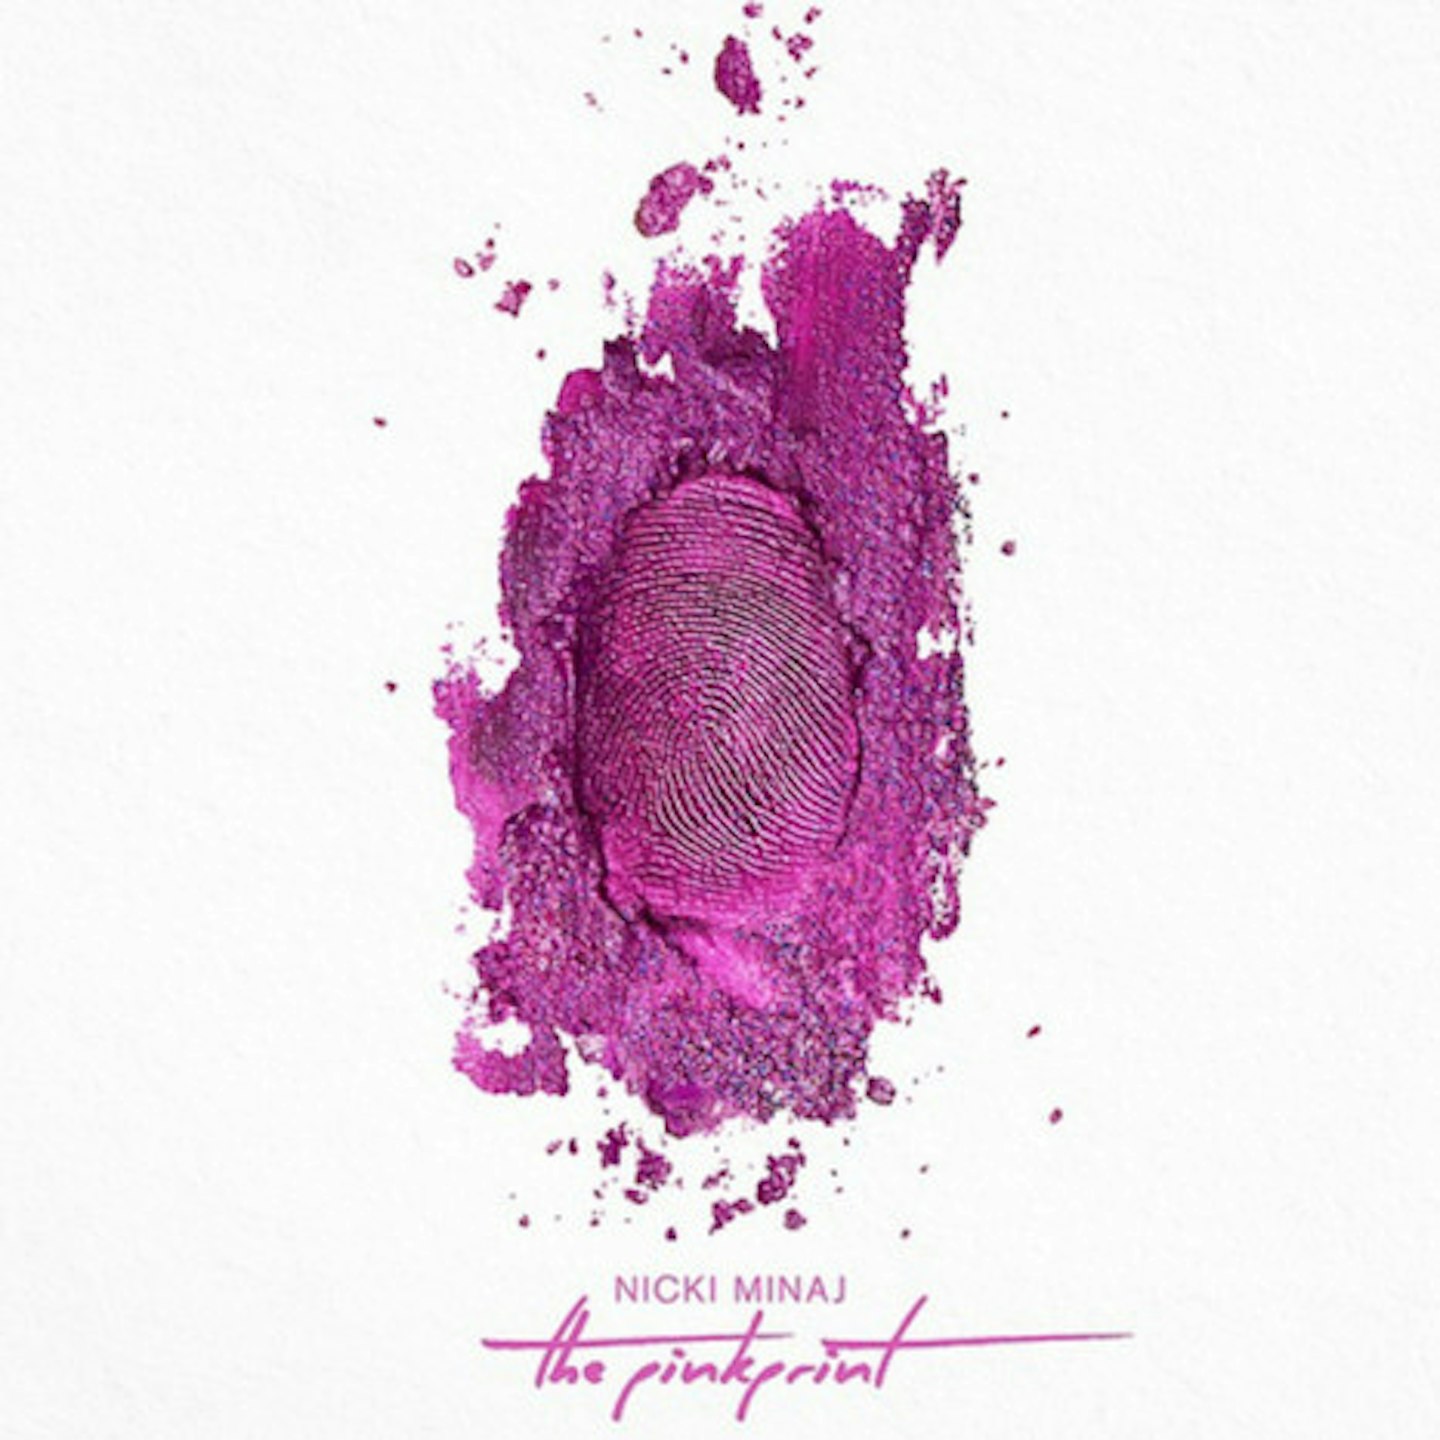 Nicki makes the emotional revelation on new album The Pink Print